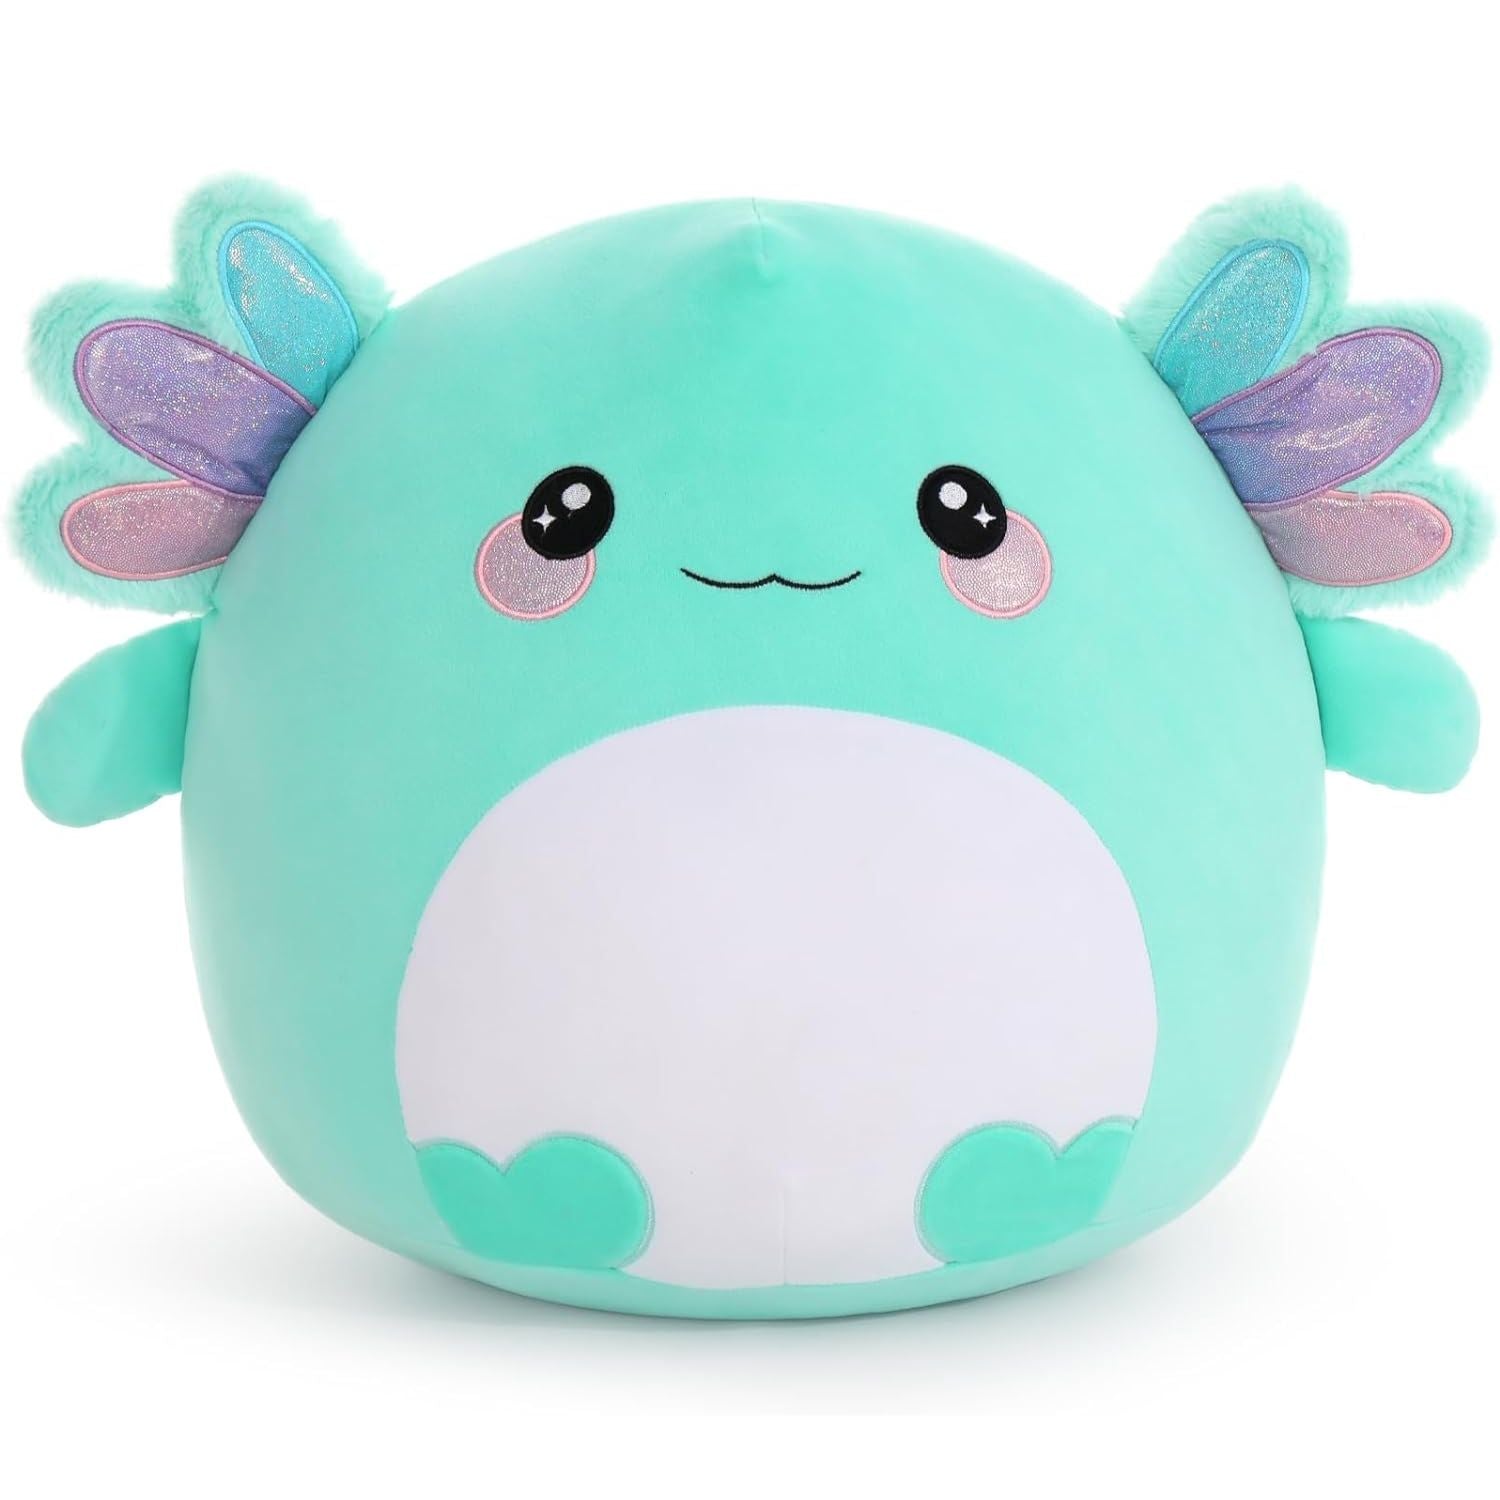 Axolotl Plush Toy, Mint Green, 15.7 Inches